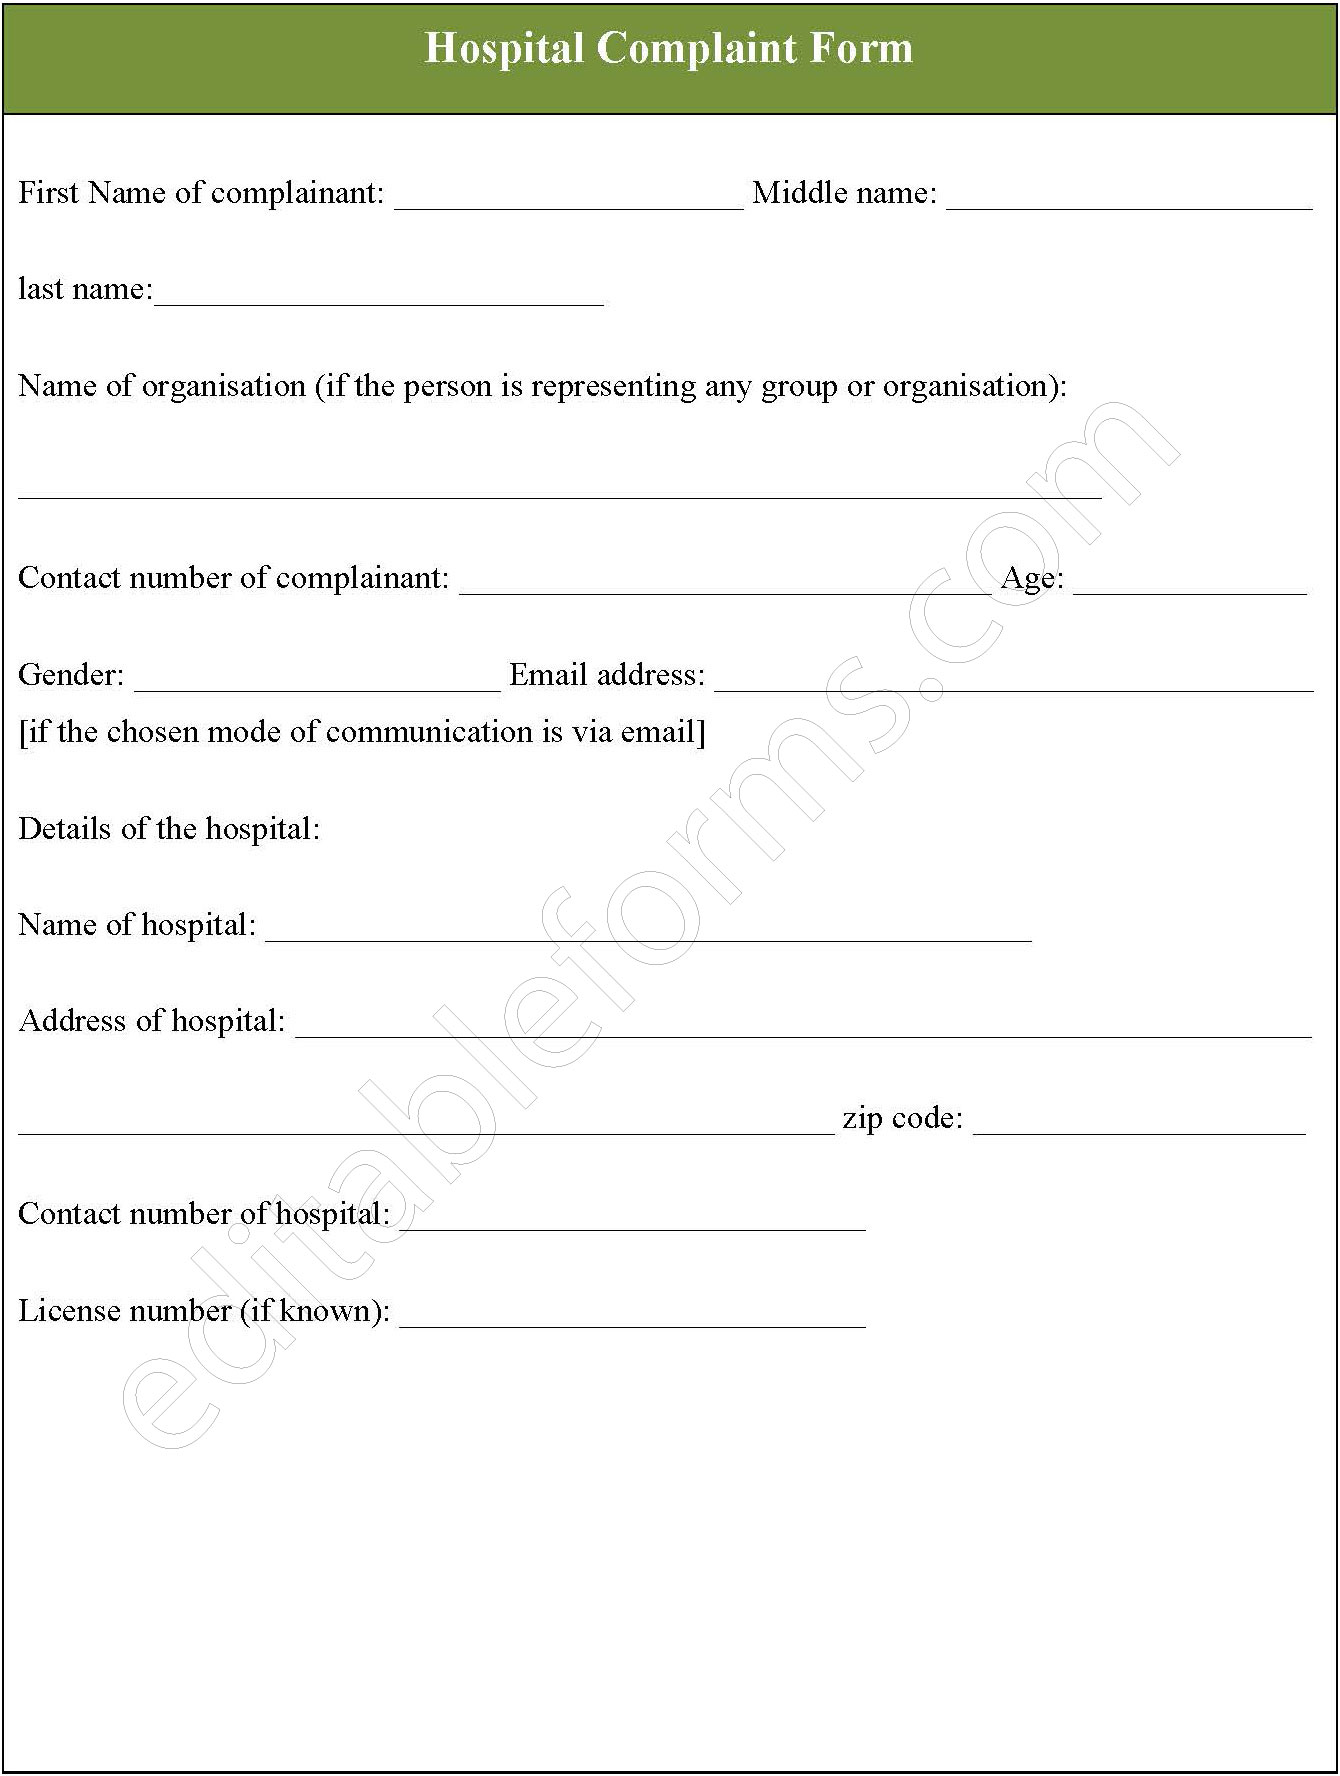 Hospital Complaint Form